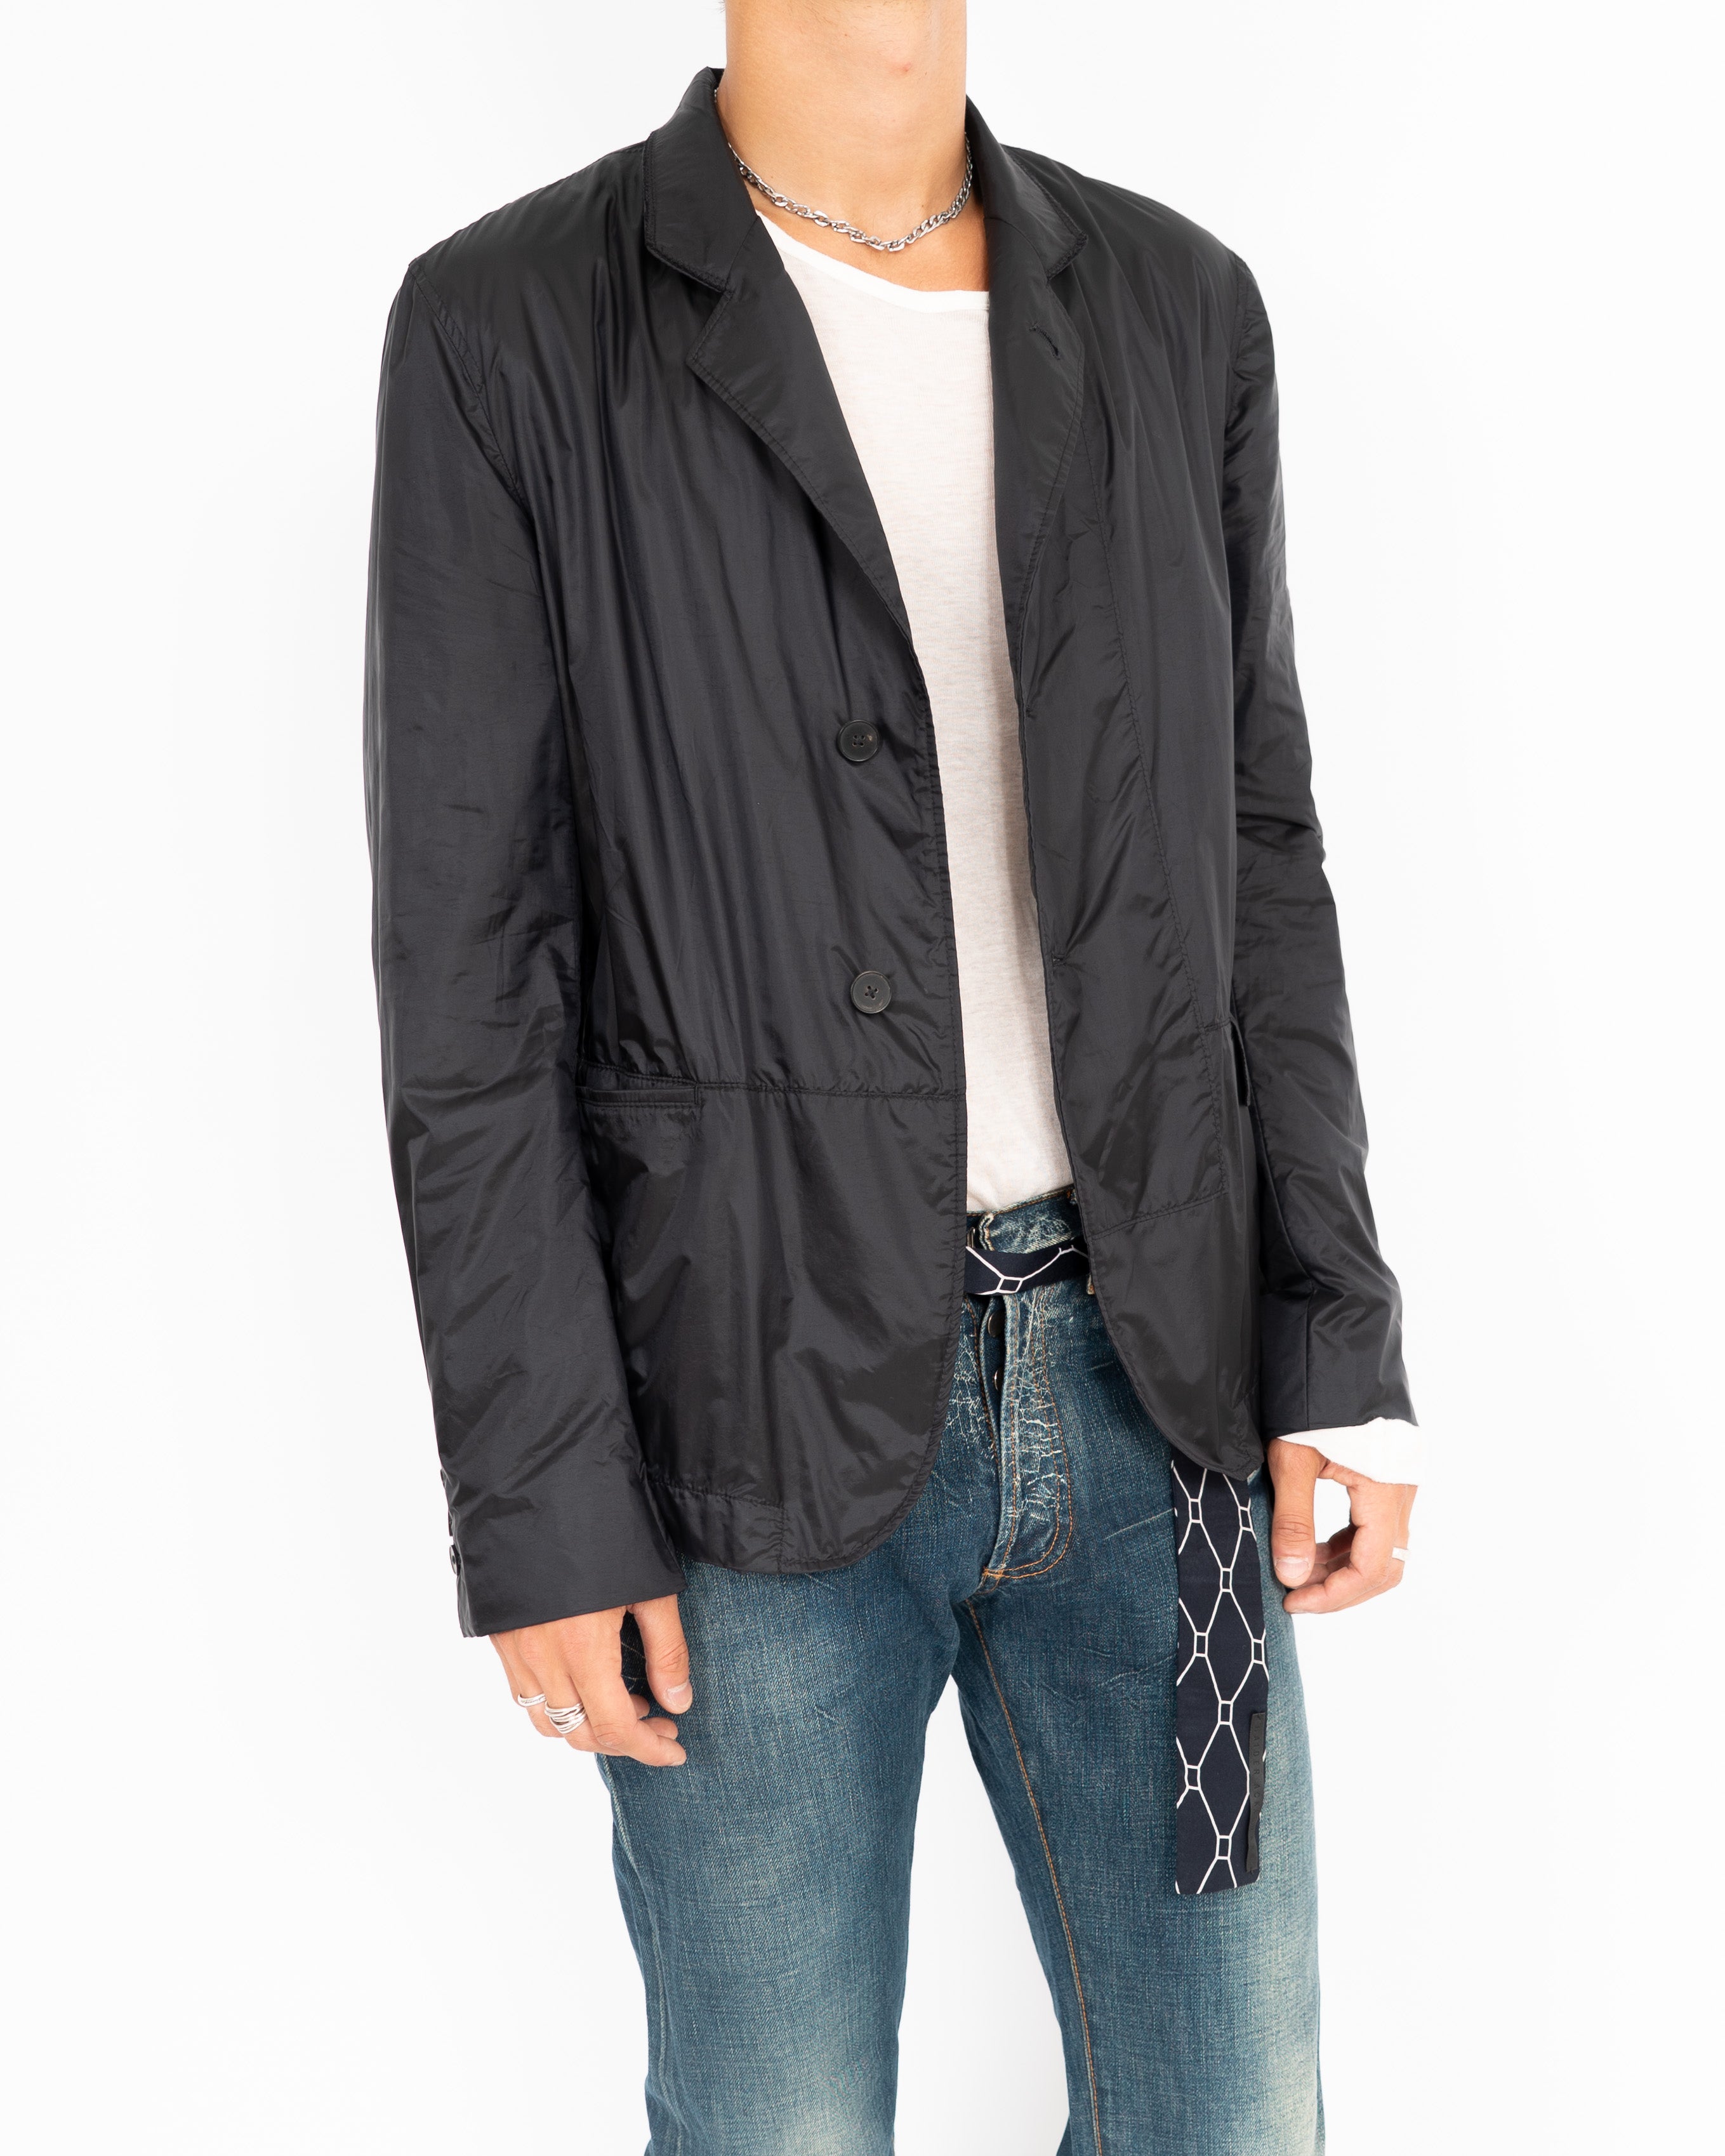 FW19 Hirst Black Nylon Blazer Jacket Sample